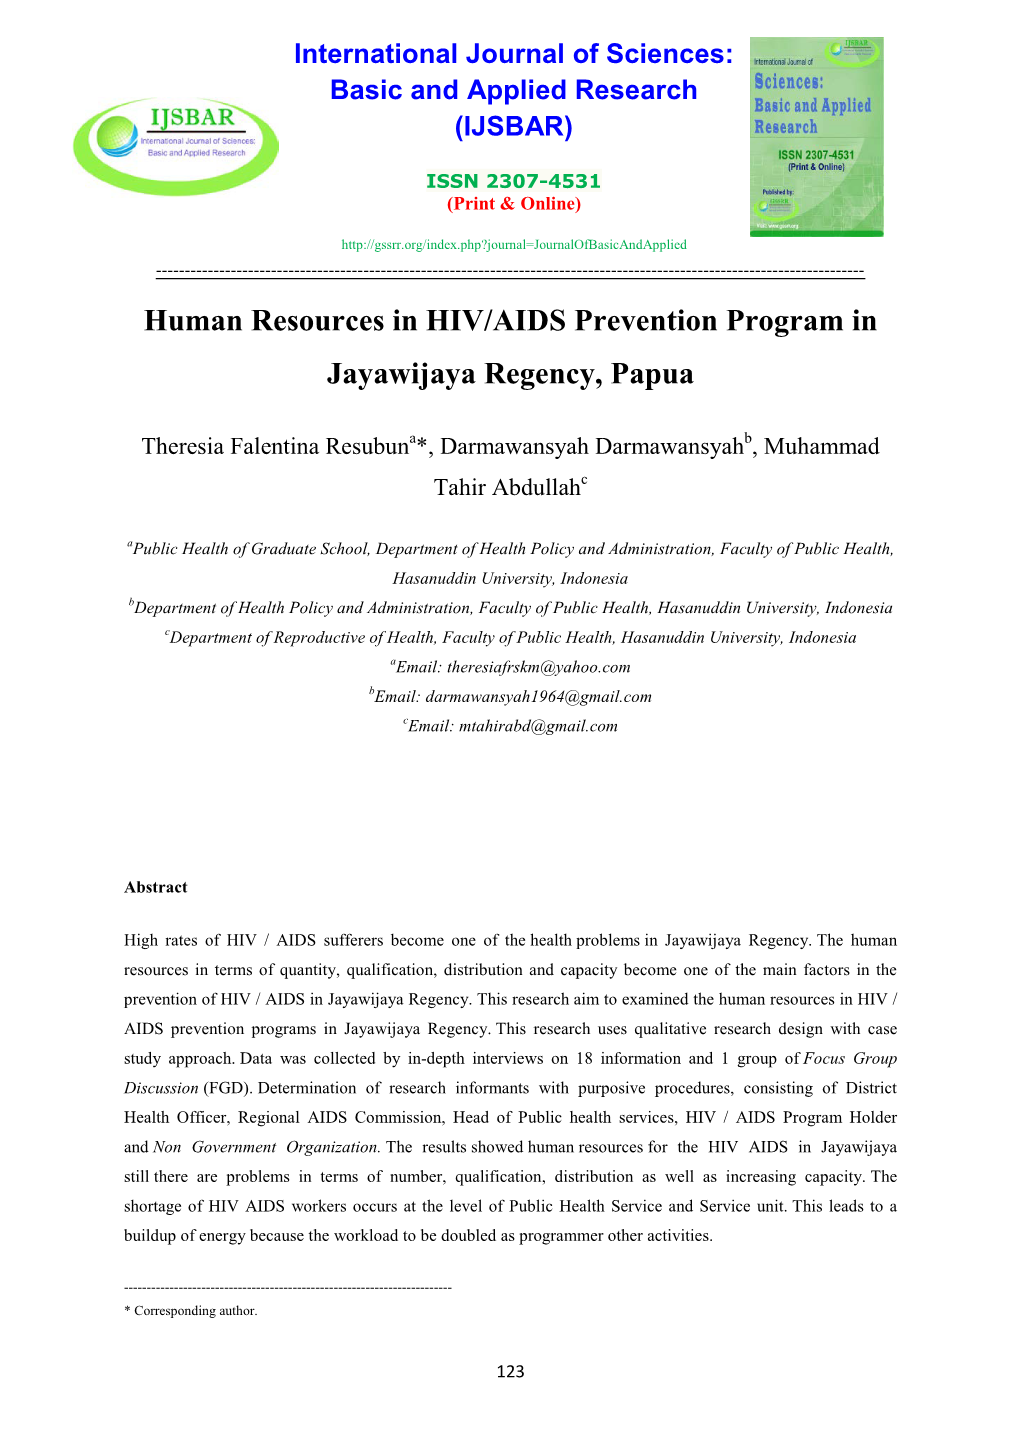 Human Resources in HIV/AIDS Prevention Program in Jayawijaya Regency, Papua